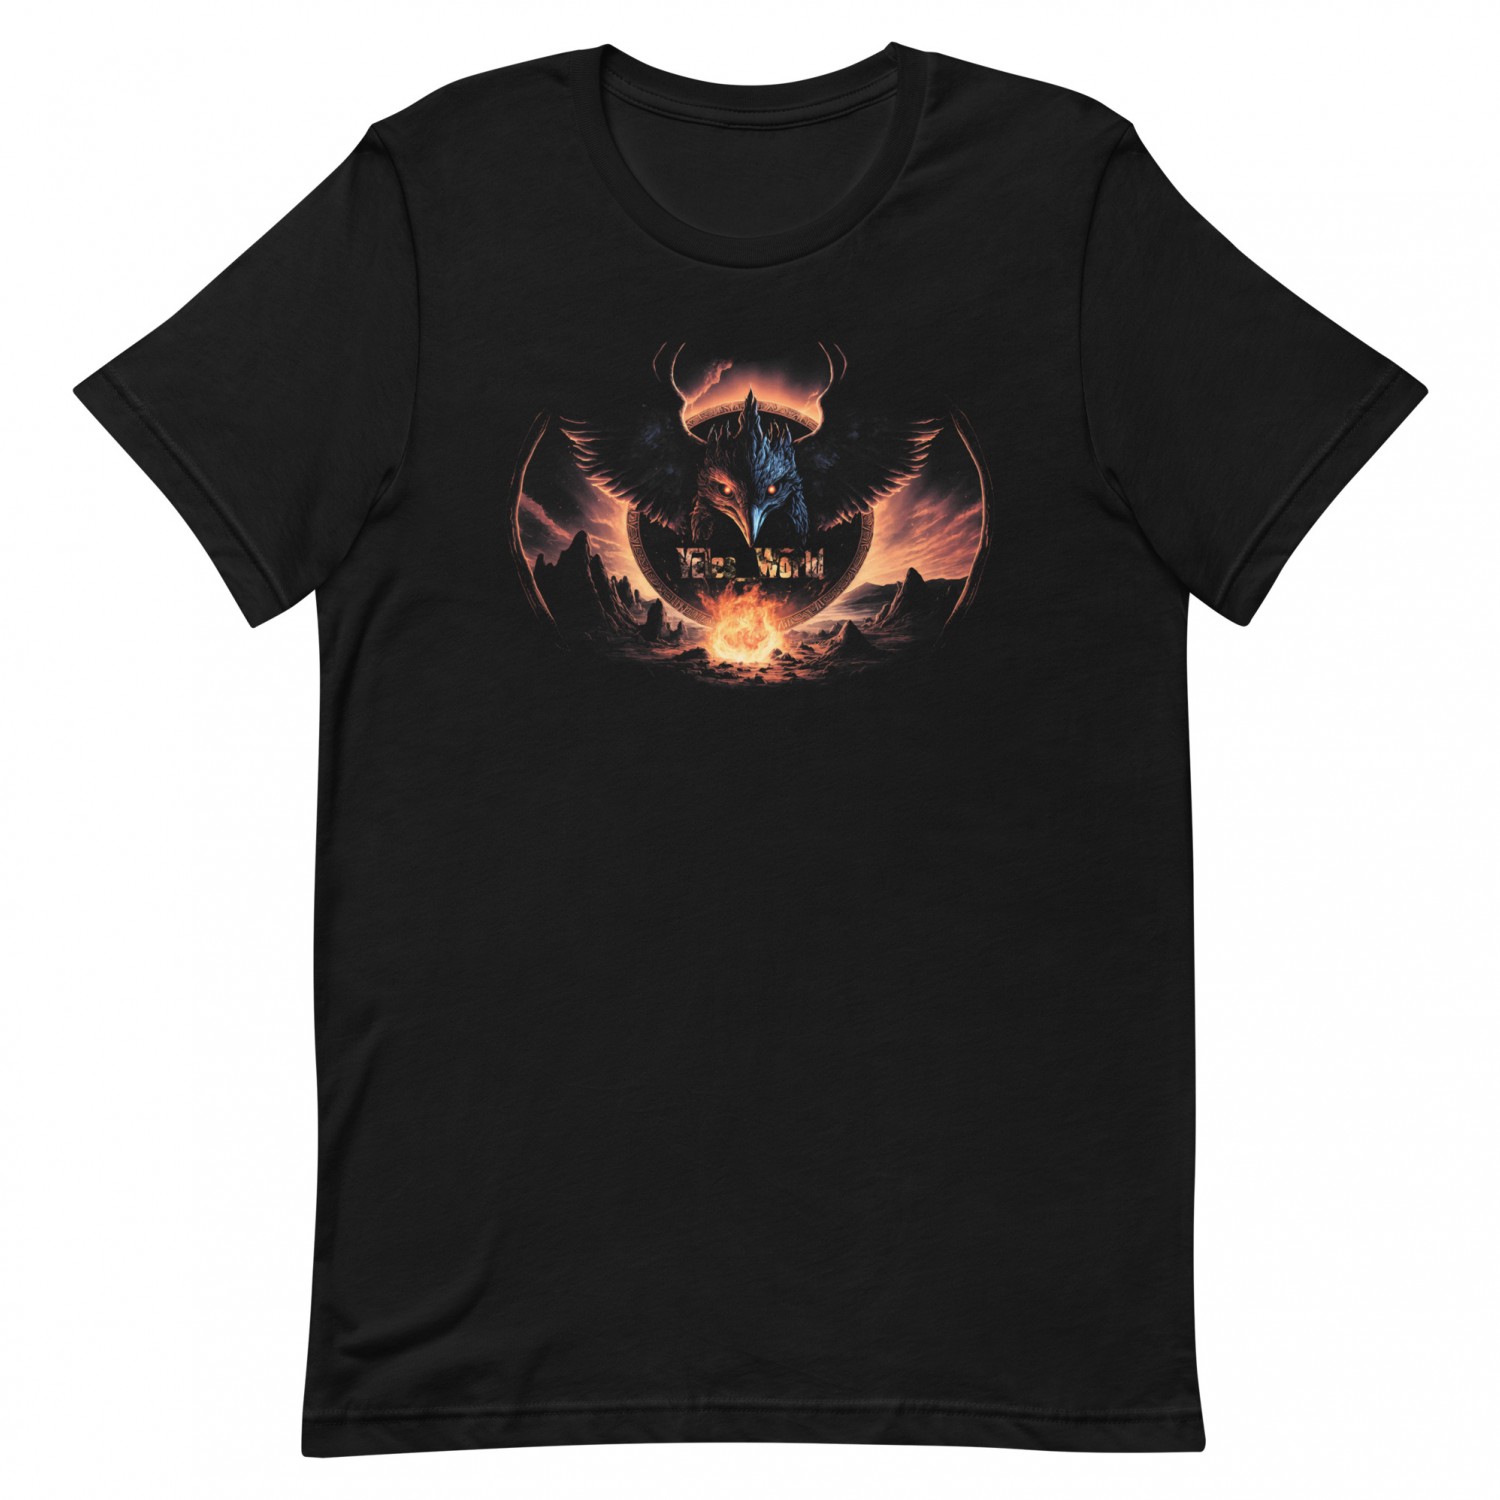 Buy T-shirt "Phoenix"